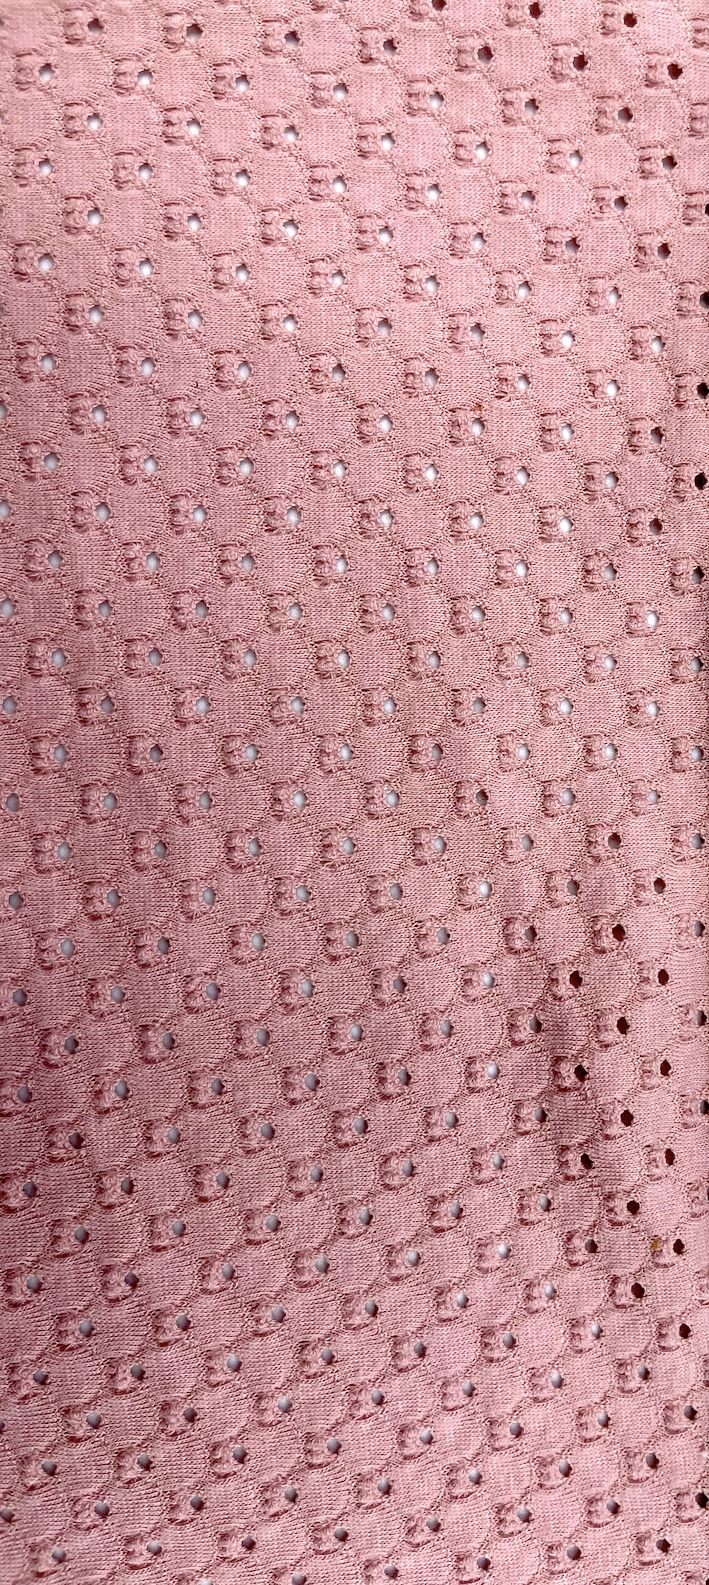 66% polyester 33% coton 1% tissu jersey élasthanne